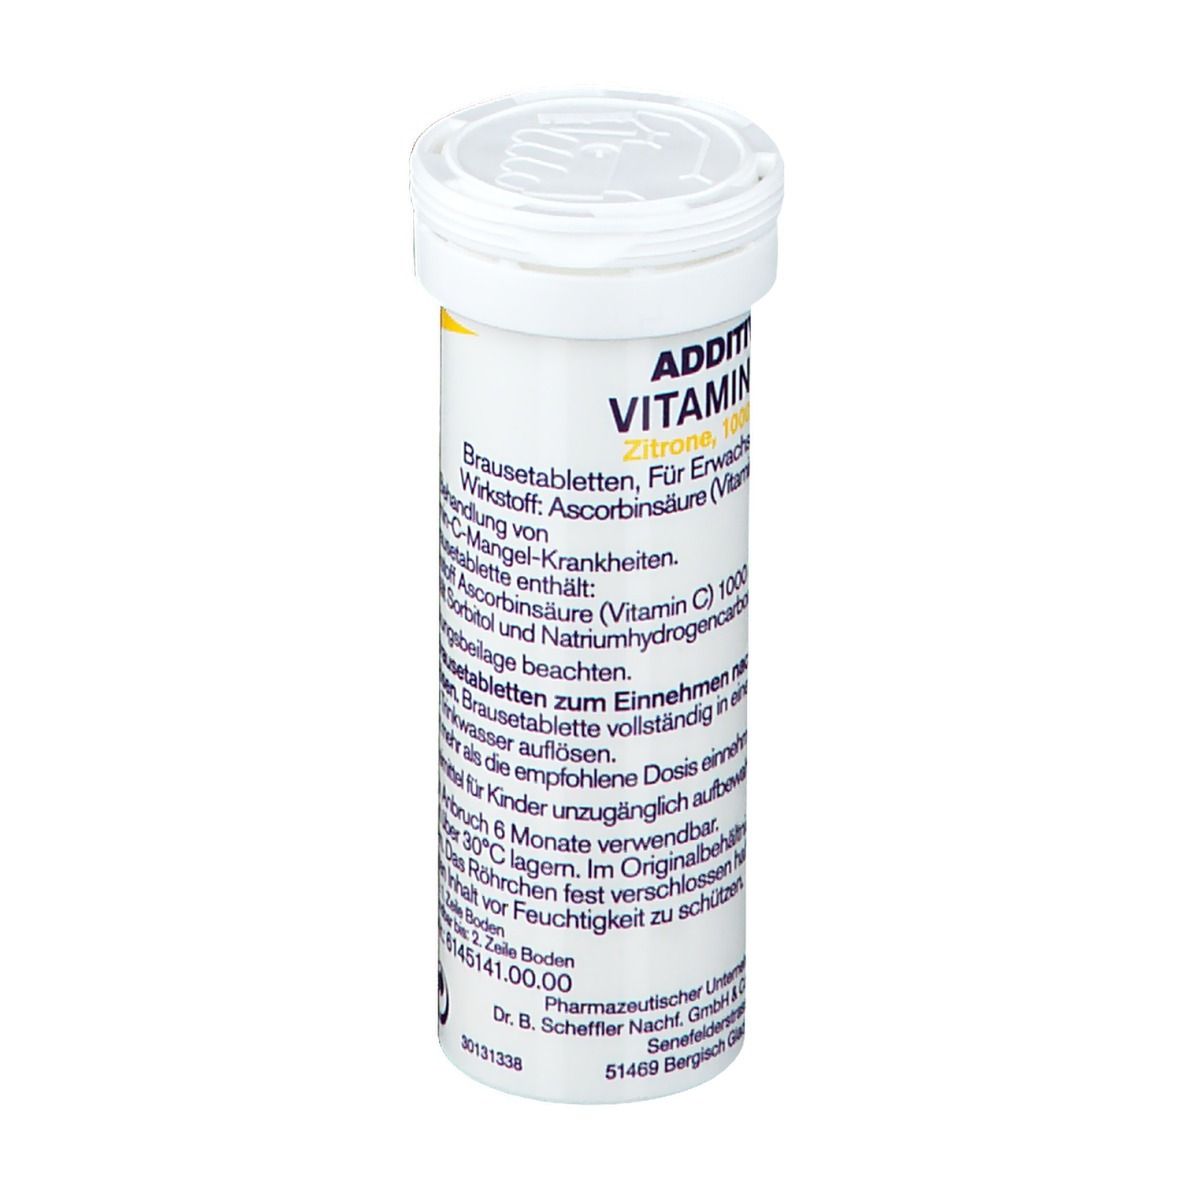 Additiva Vitamin C